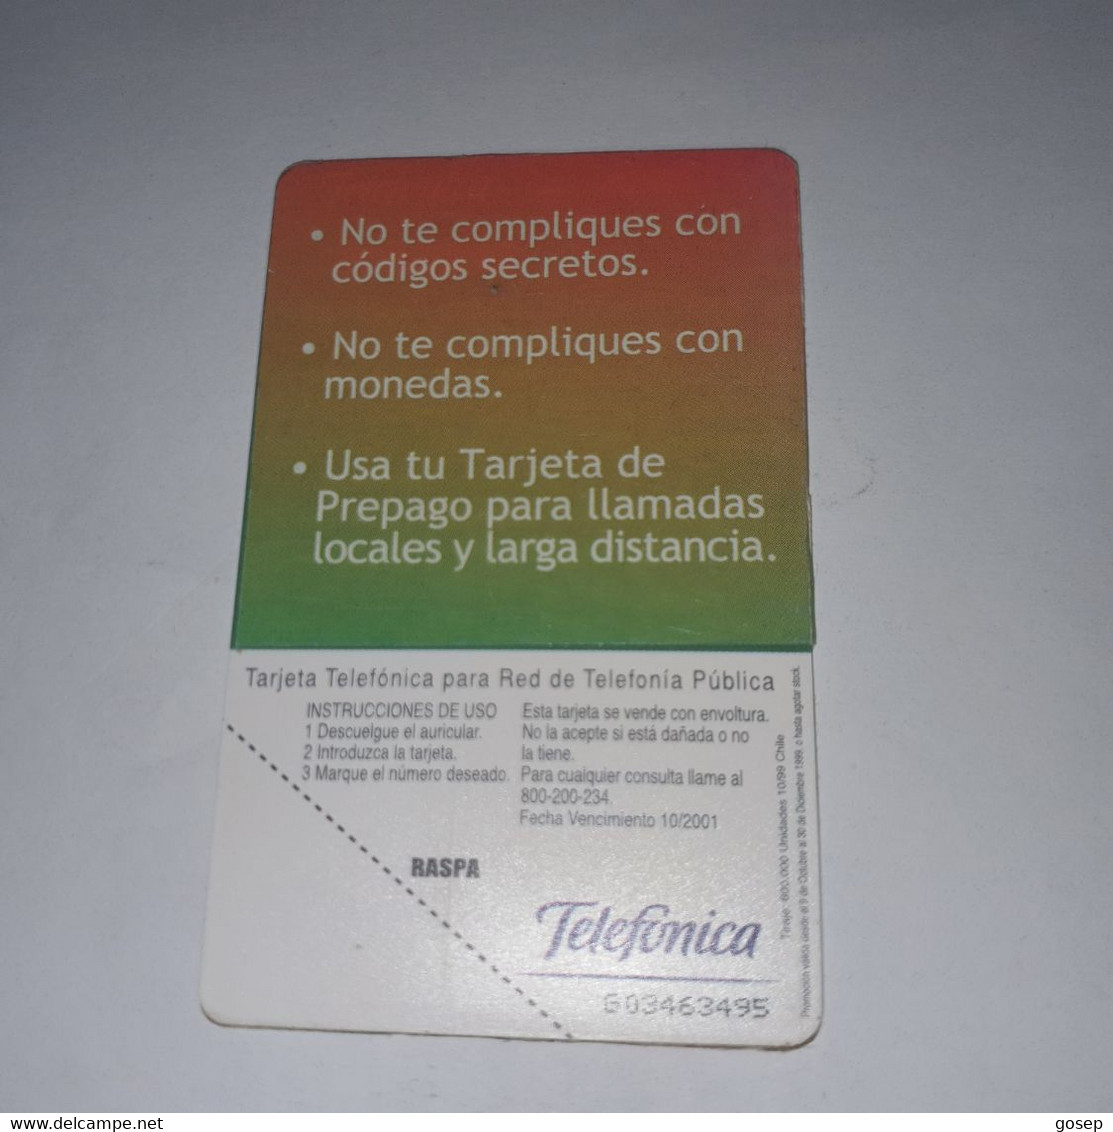 Chile-(cl-tlf-010)-usala Siempre-(87)-($2.000)-(G03463495)-(10/1999)-(600.000)-used Card+1card Prepiad Free - Chile